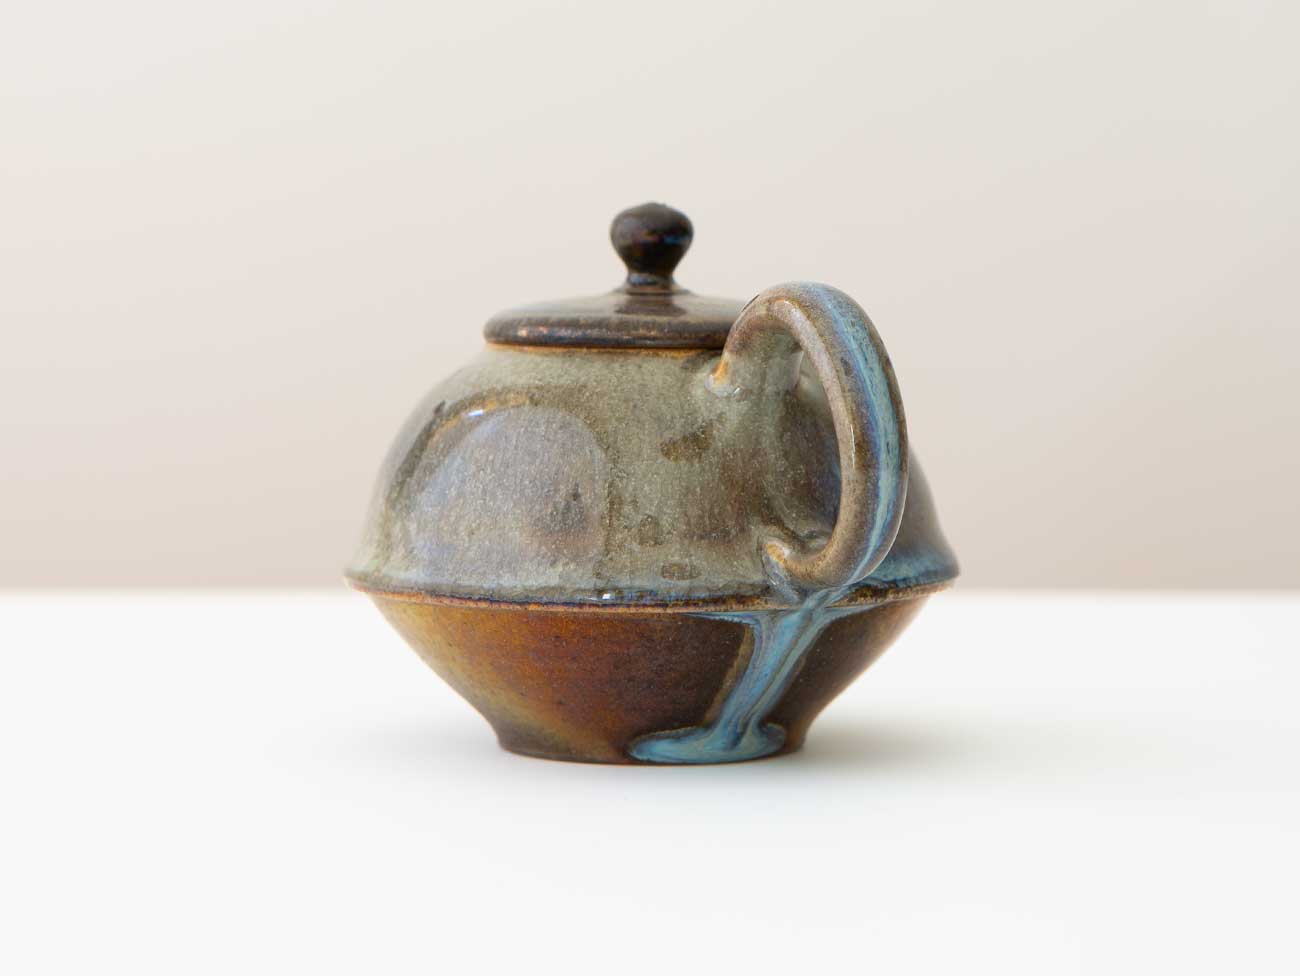 Waterfall. Shino and Cobalt glazed wood-fired teapot.